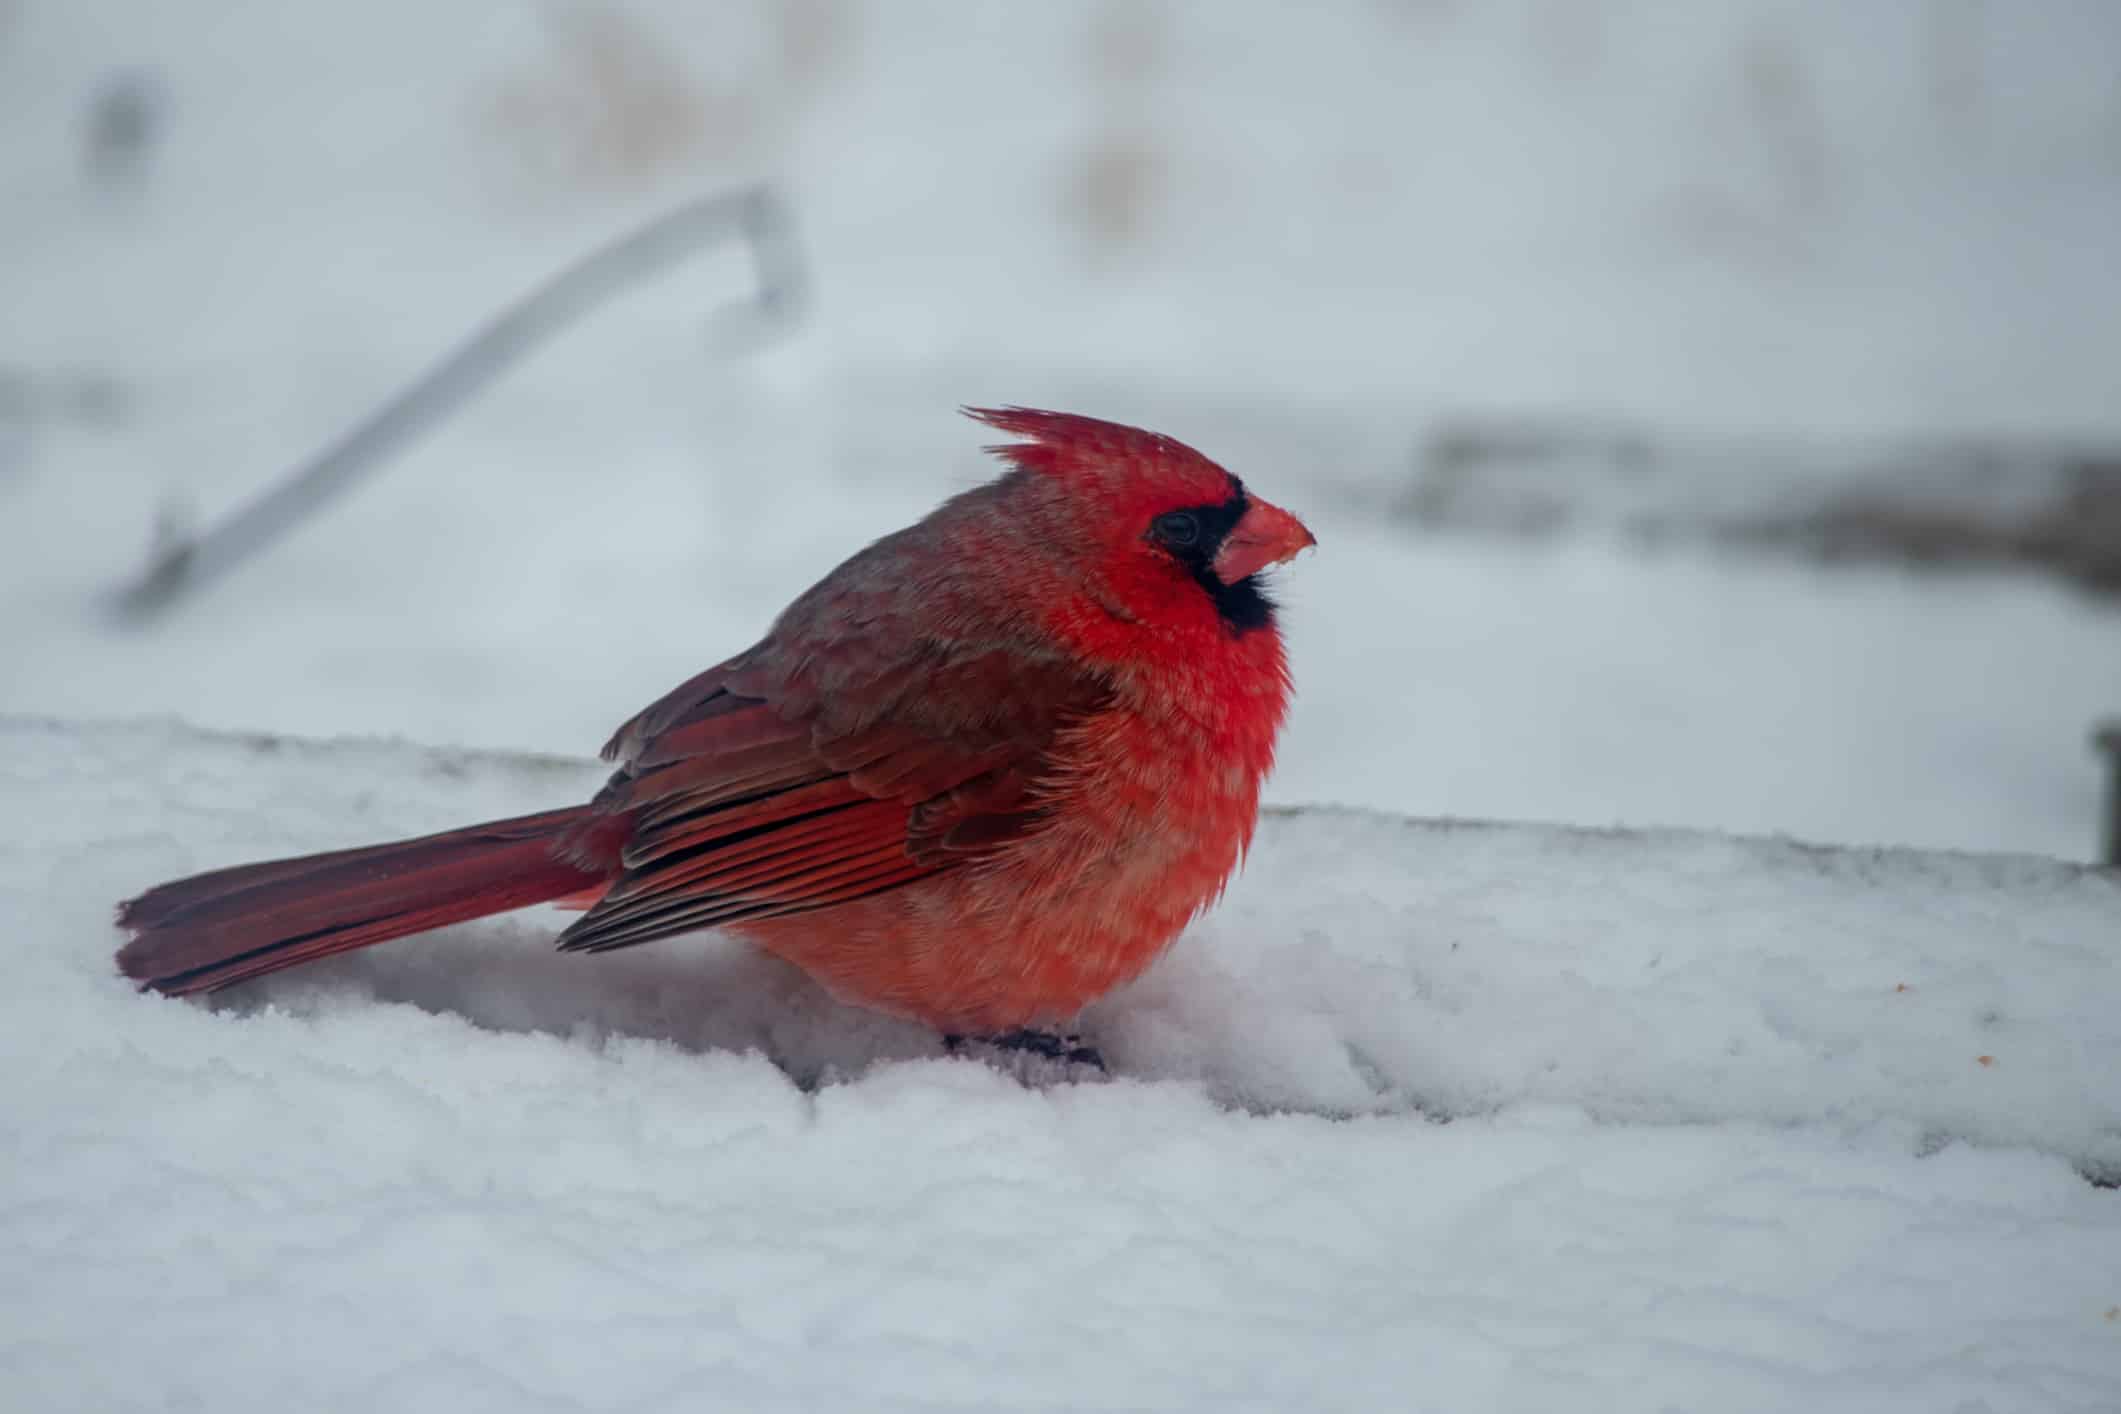 Male Northern cardinal in Missouri snow